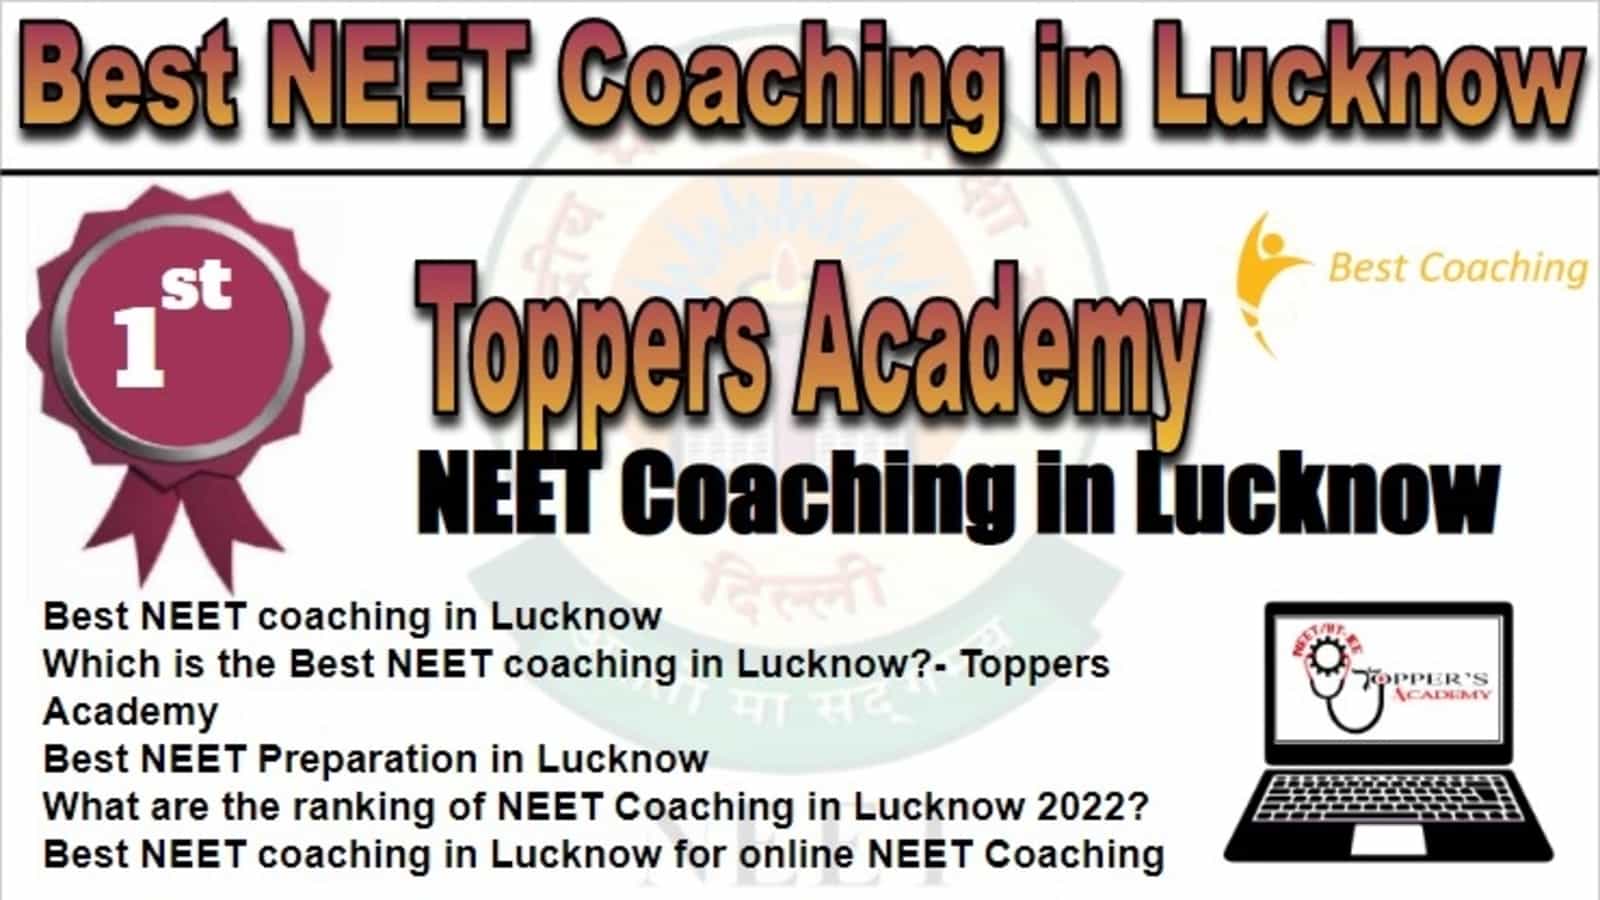 Rank 1 Best NEET Coaching in Lucknow